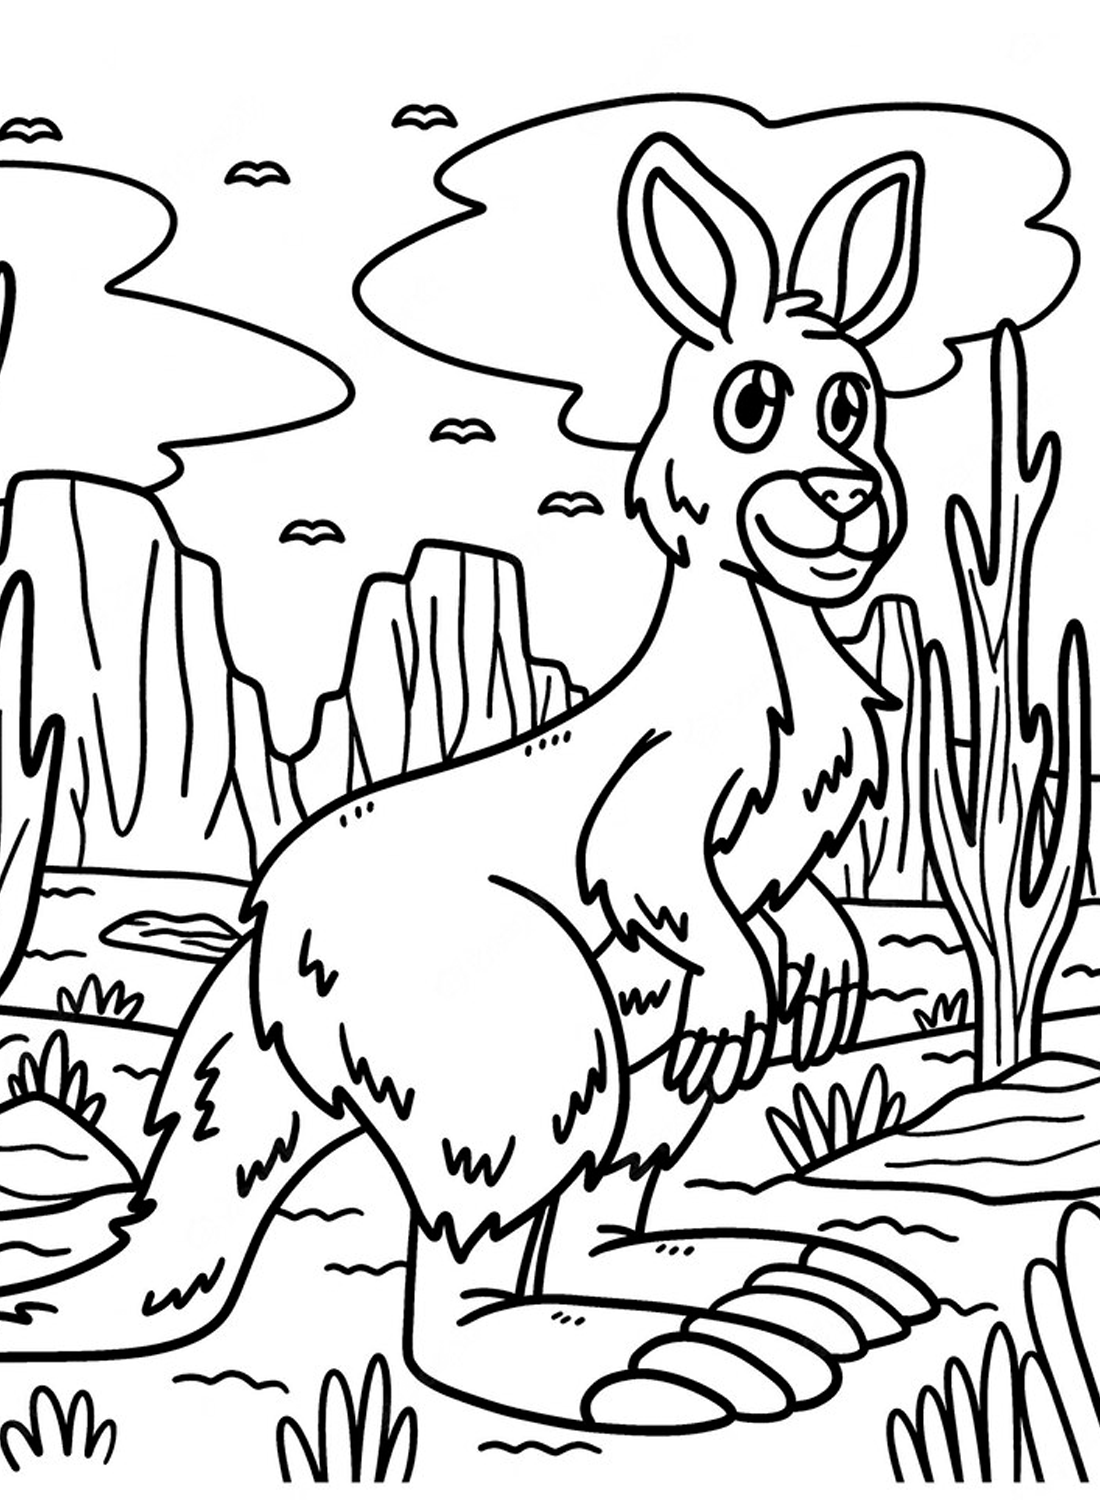 Kangaroo from Kangaroo